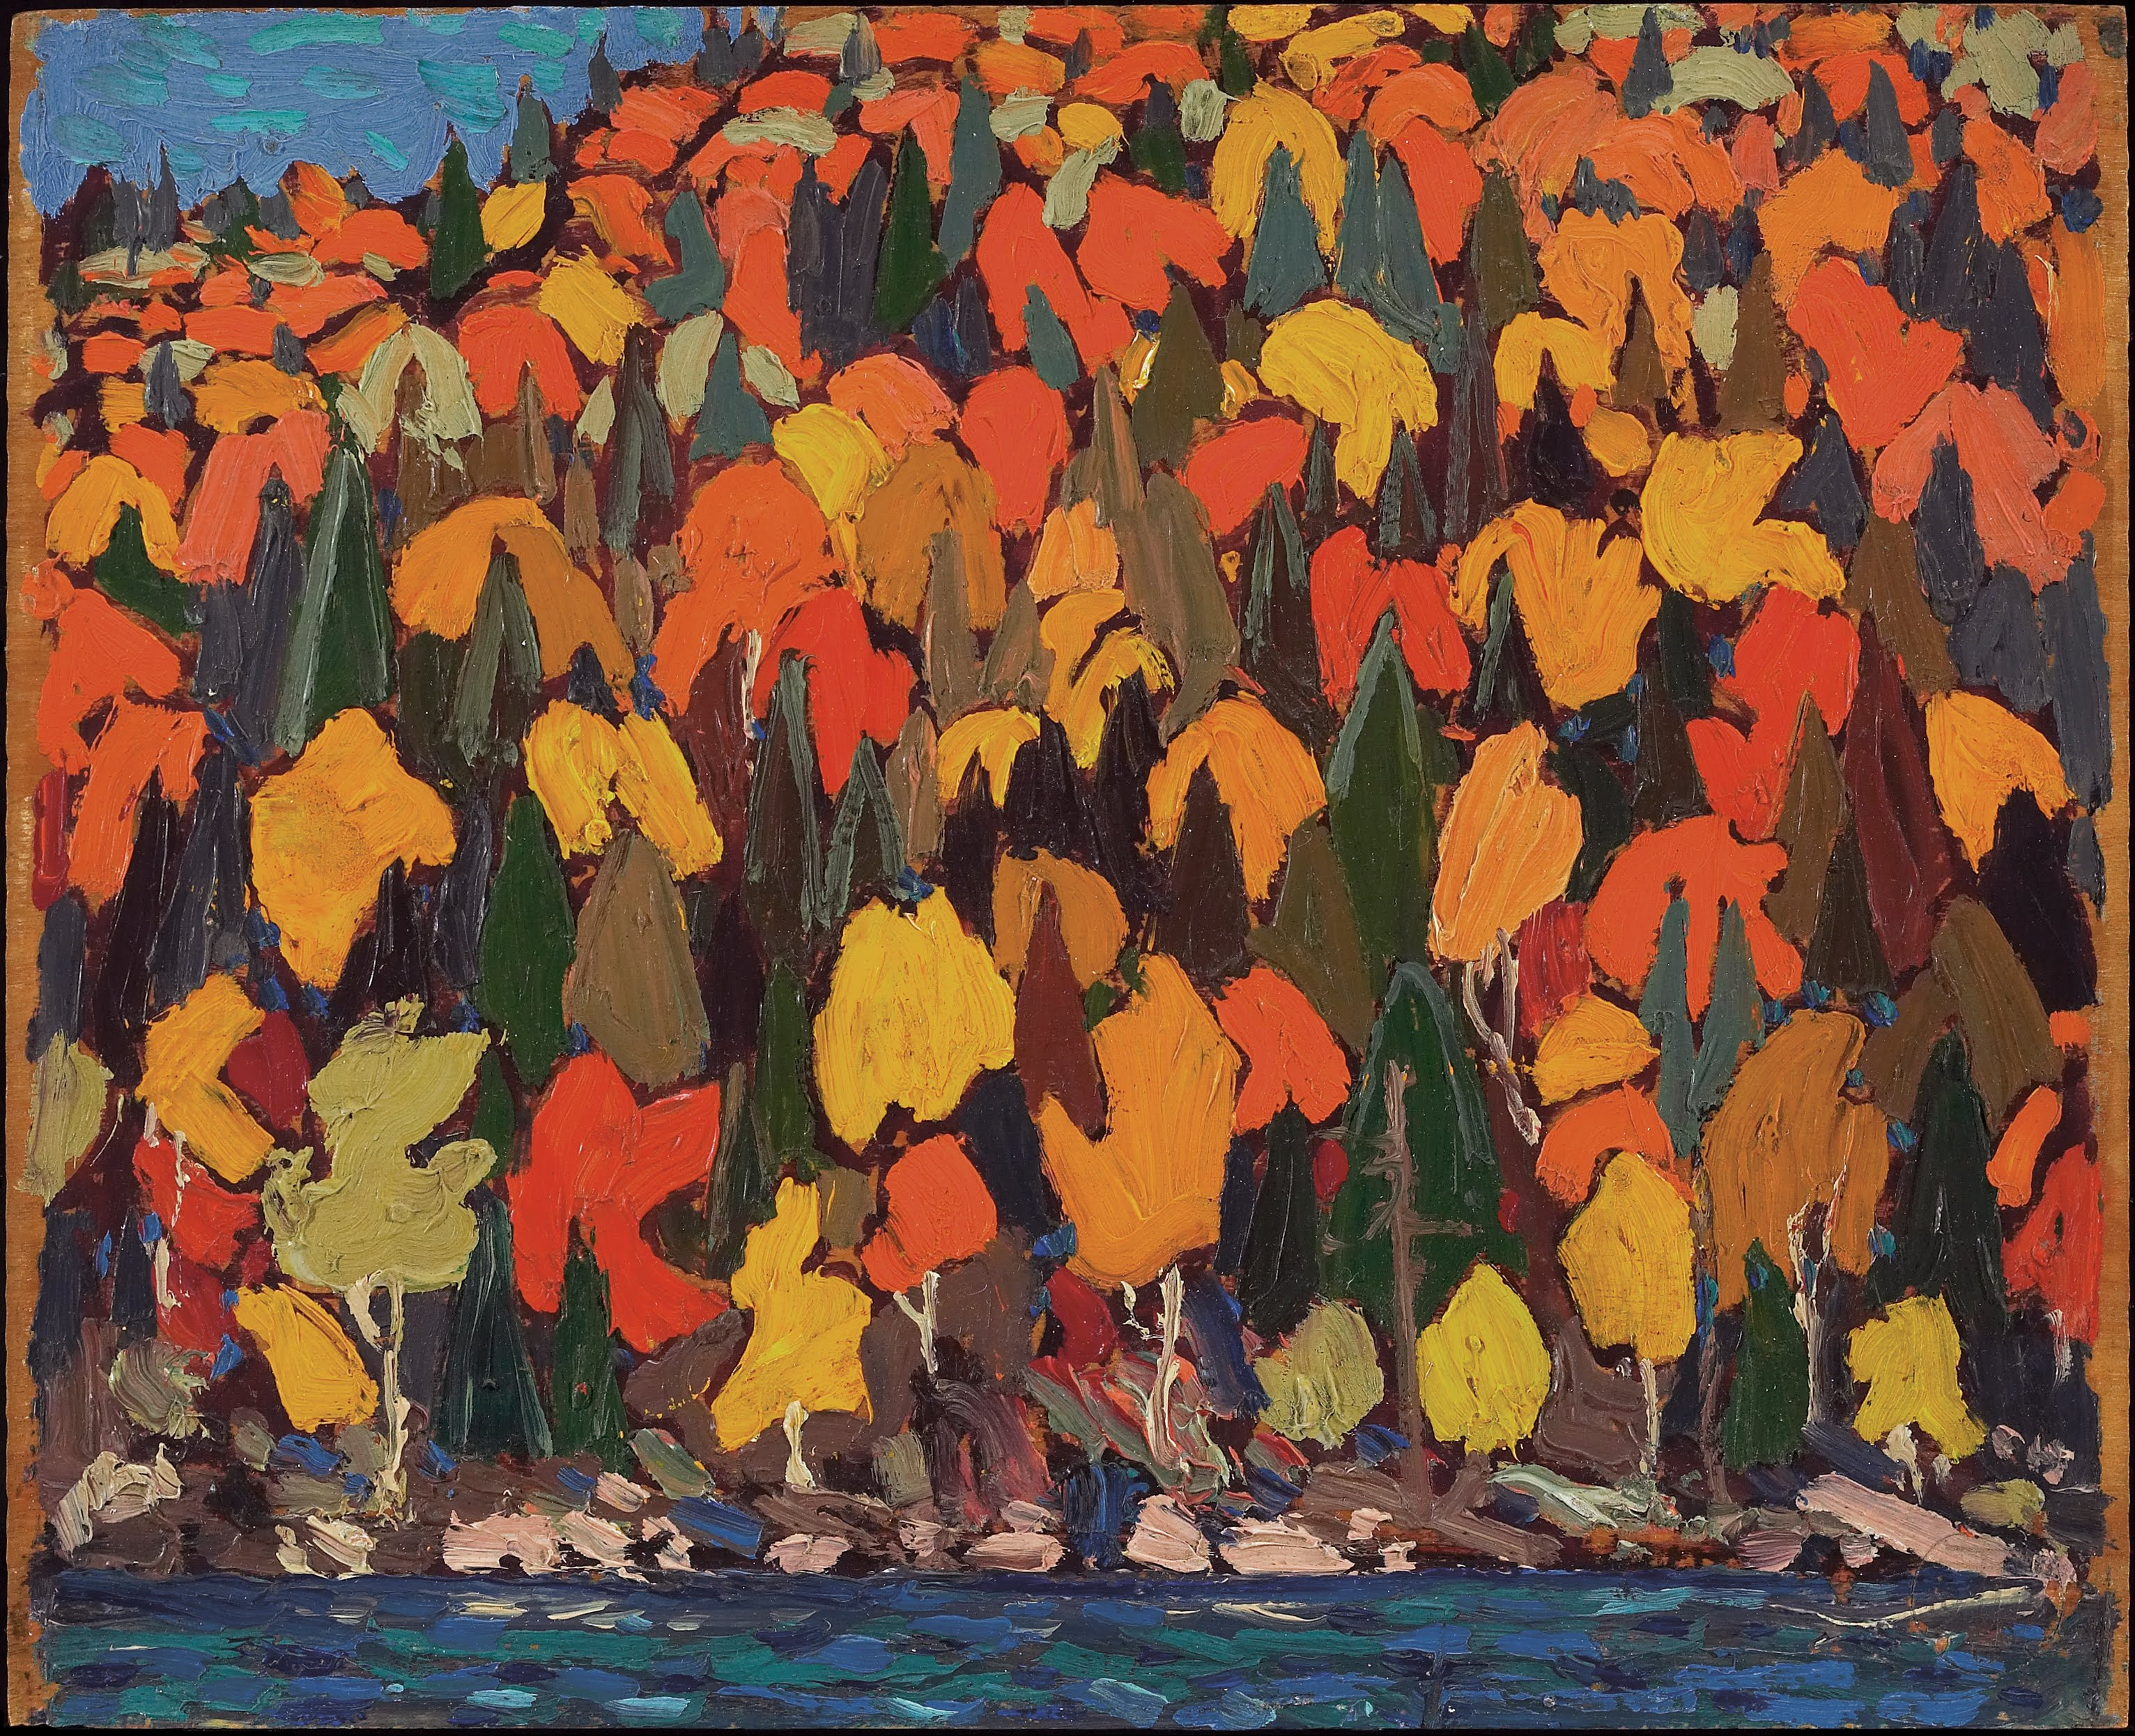 Autumn Foliage by Tom Thomson - 1915 - 21,6 x 26,8 cm Art Gallery of Ontario